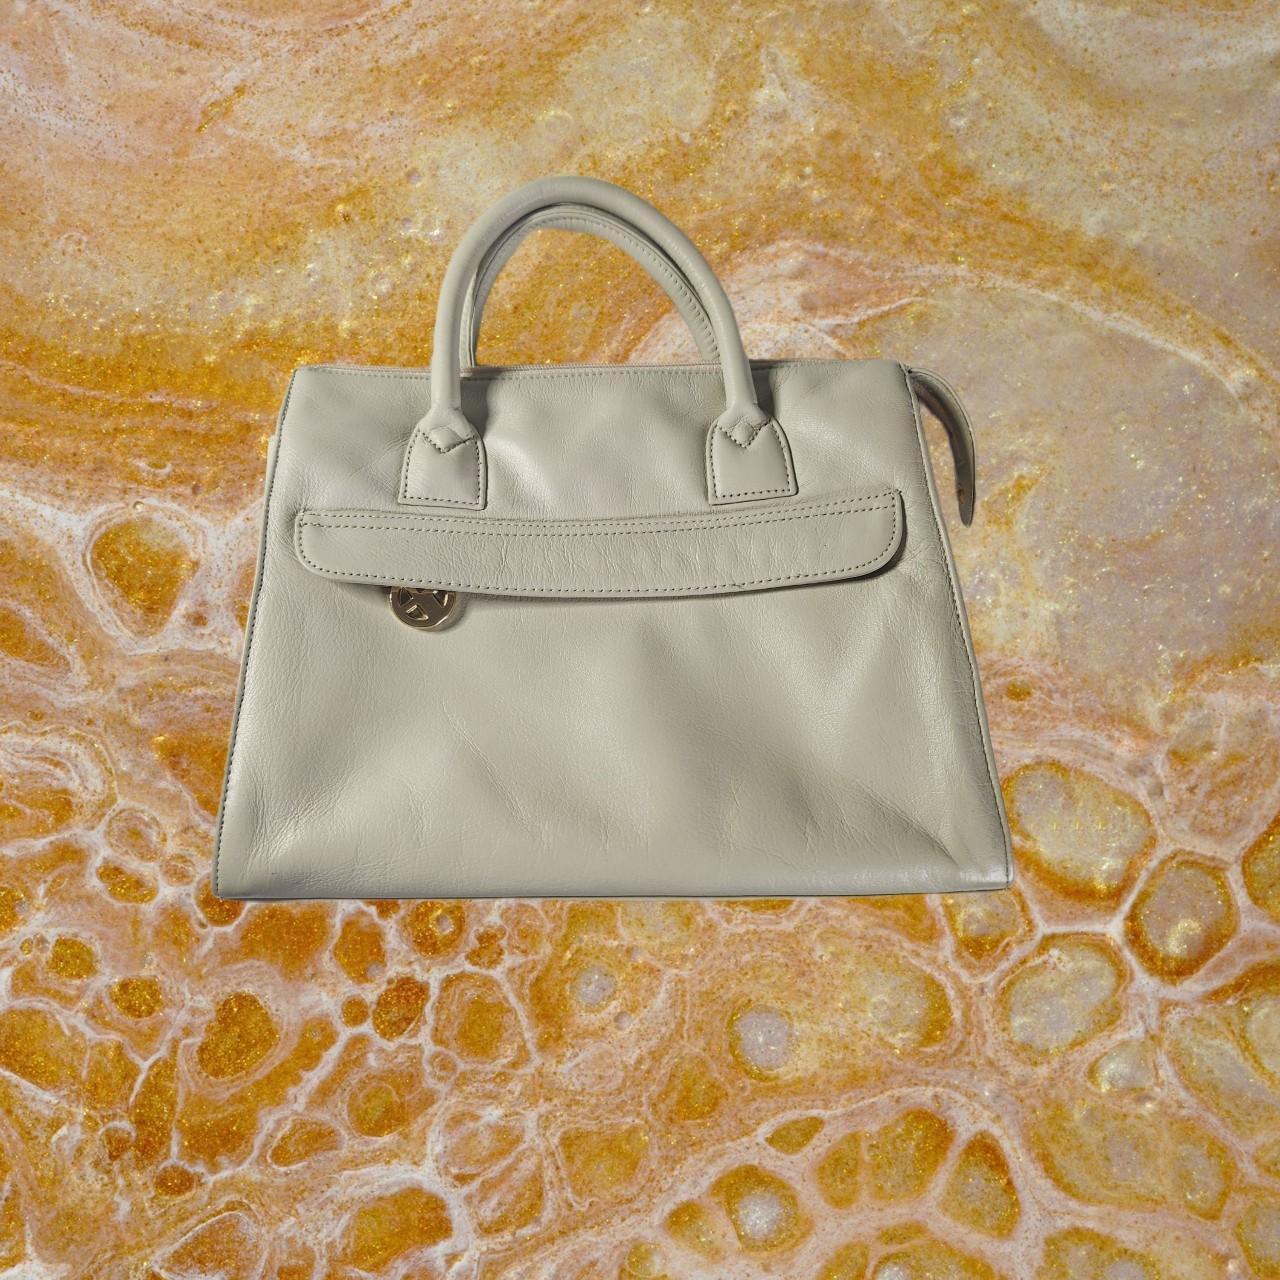 Giani Bernini Women's Cream Bag